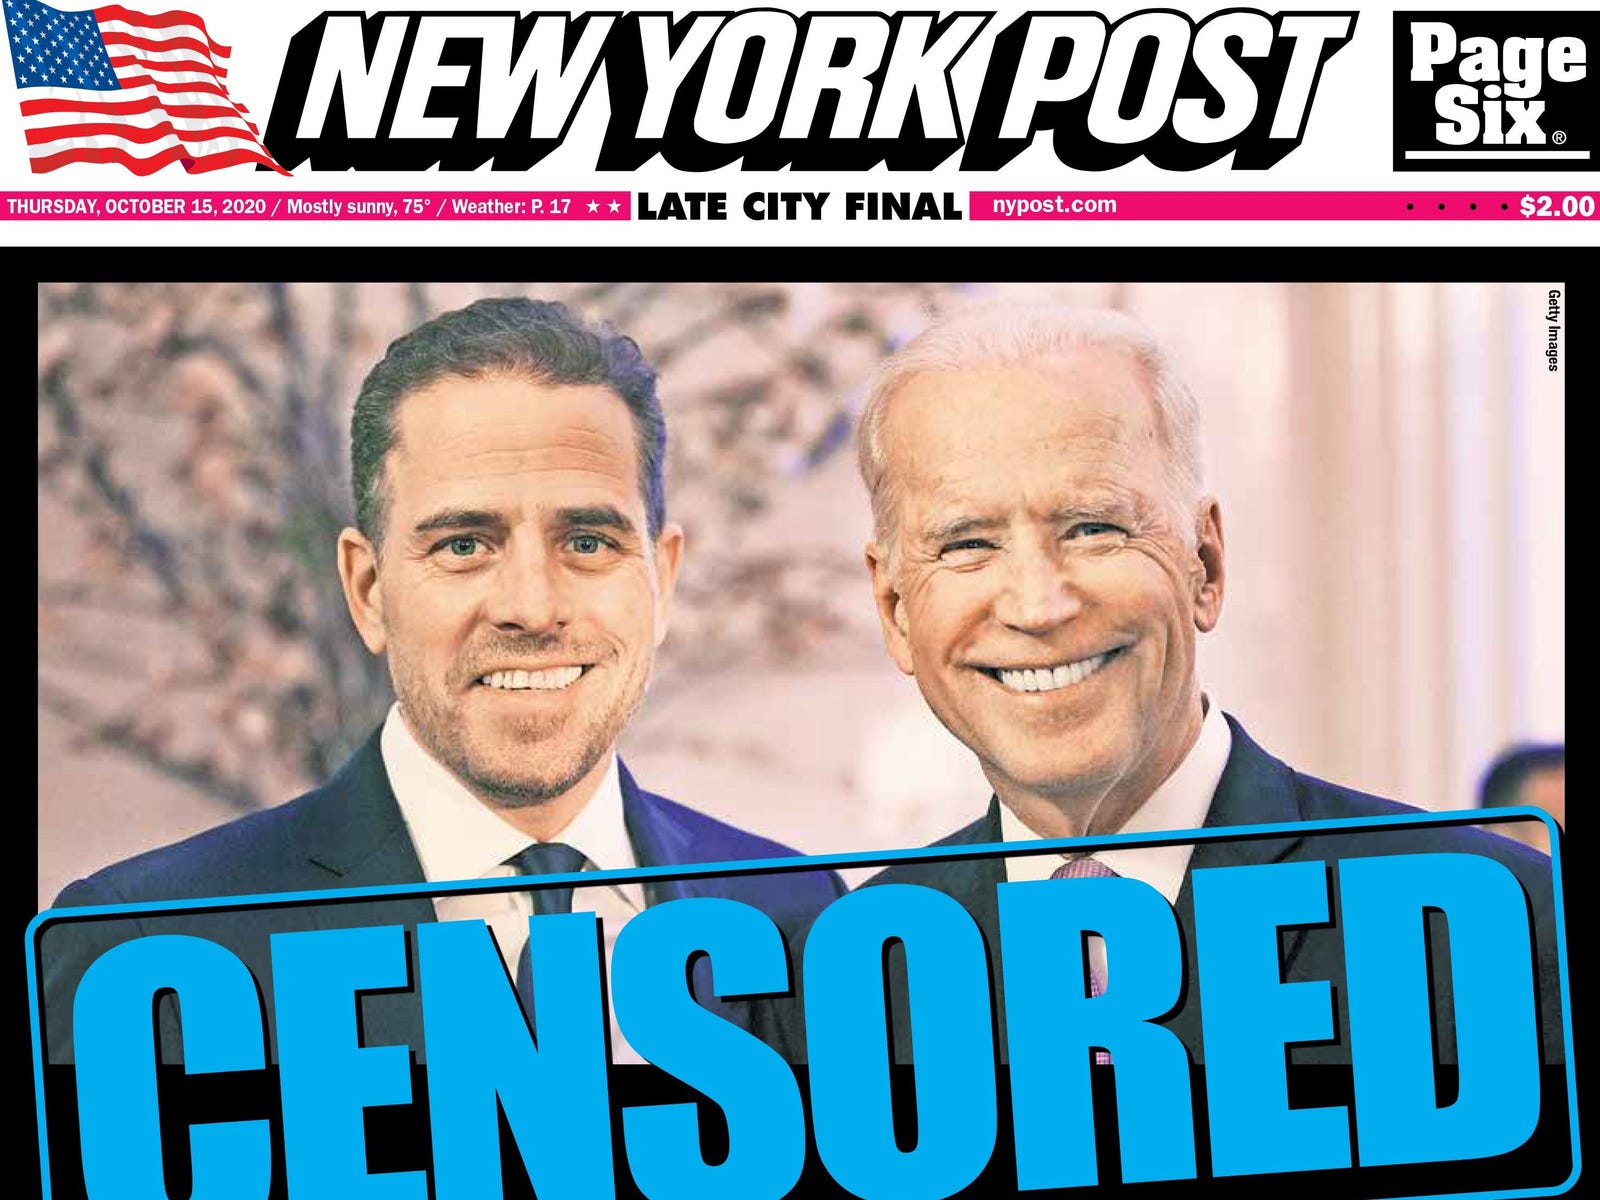 Twitter, Biden and the New York Post – Social Media Censorship Kicks up a Gear